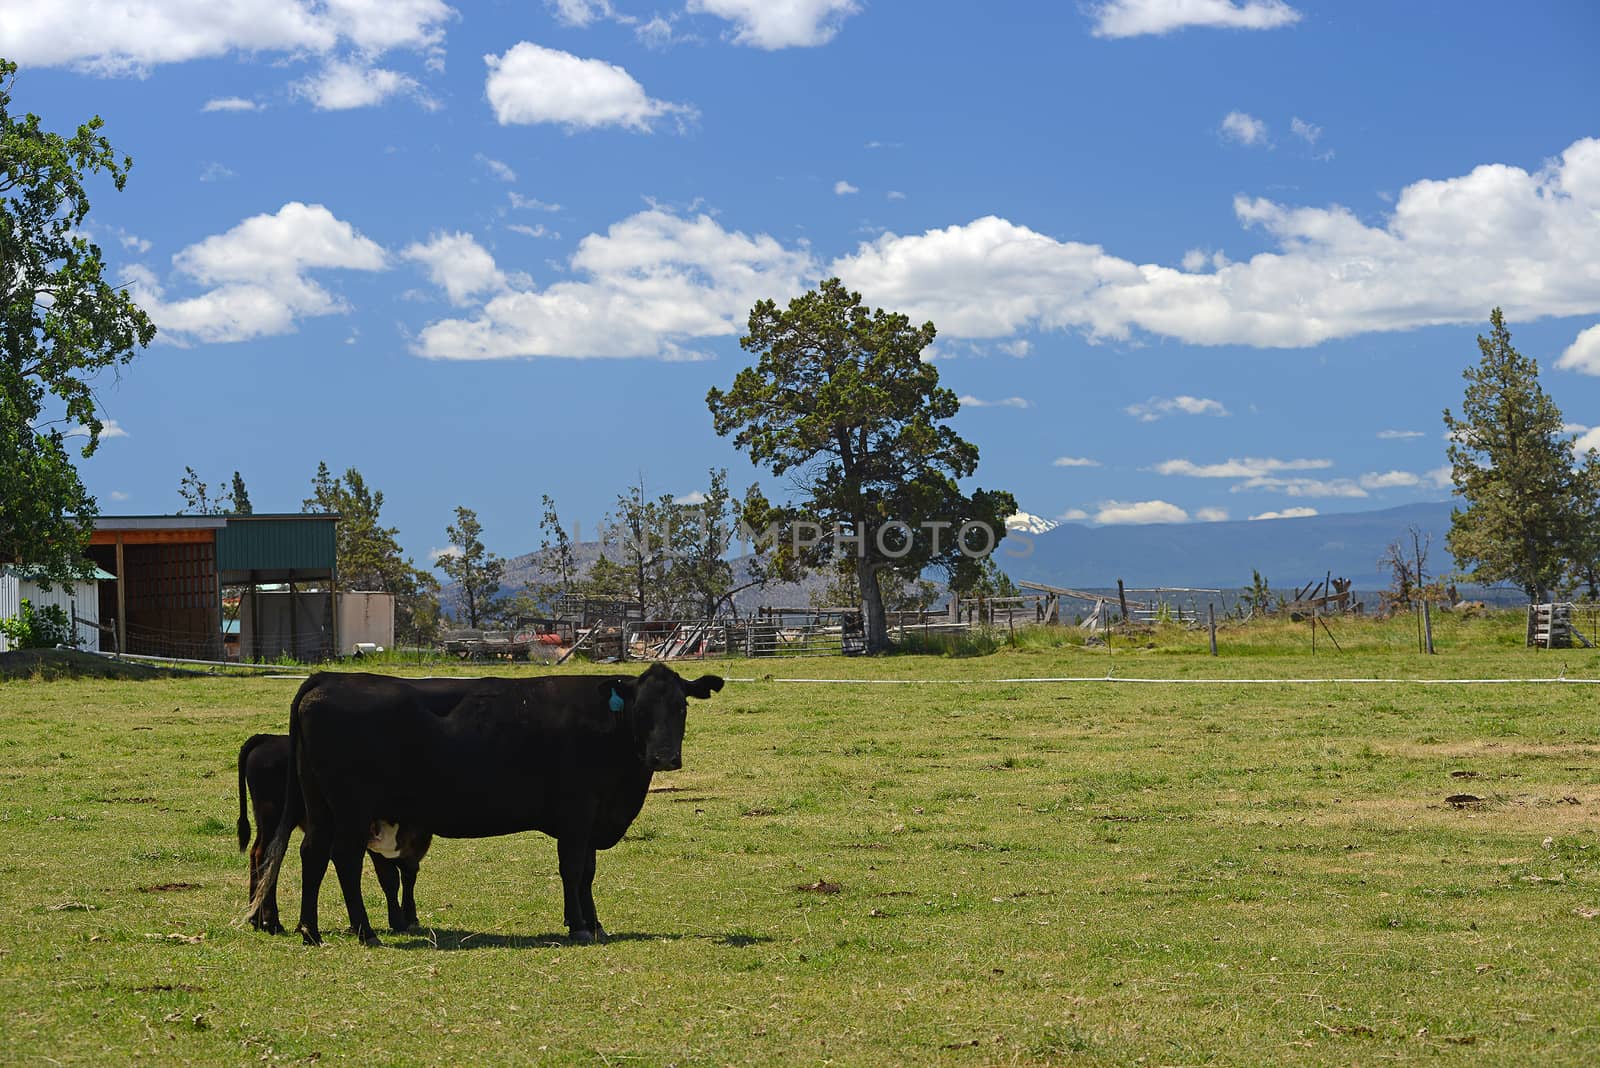 cattle in a farm by porbital